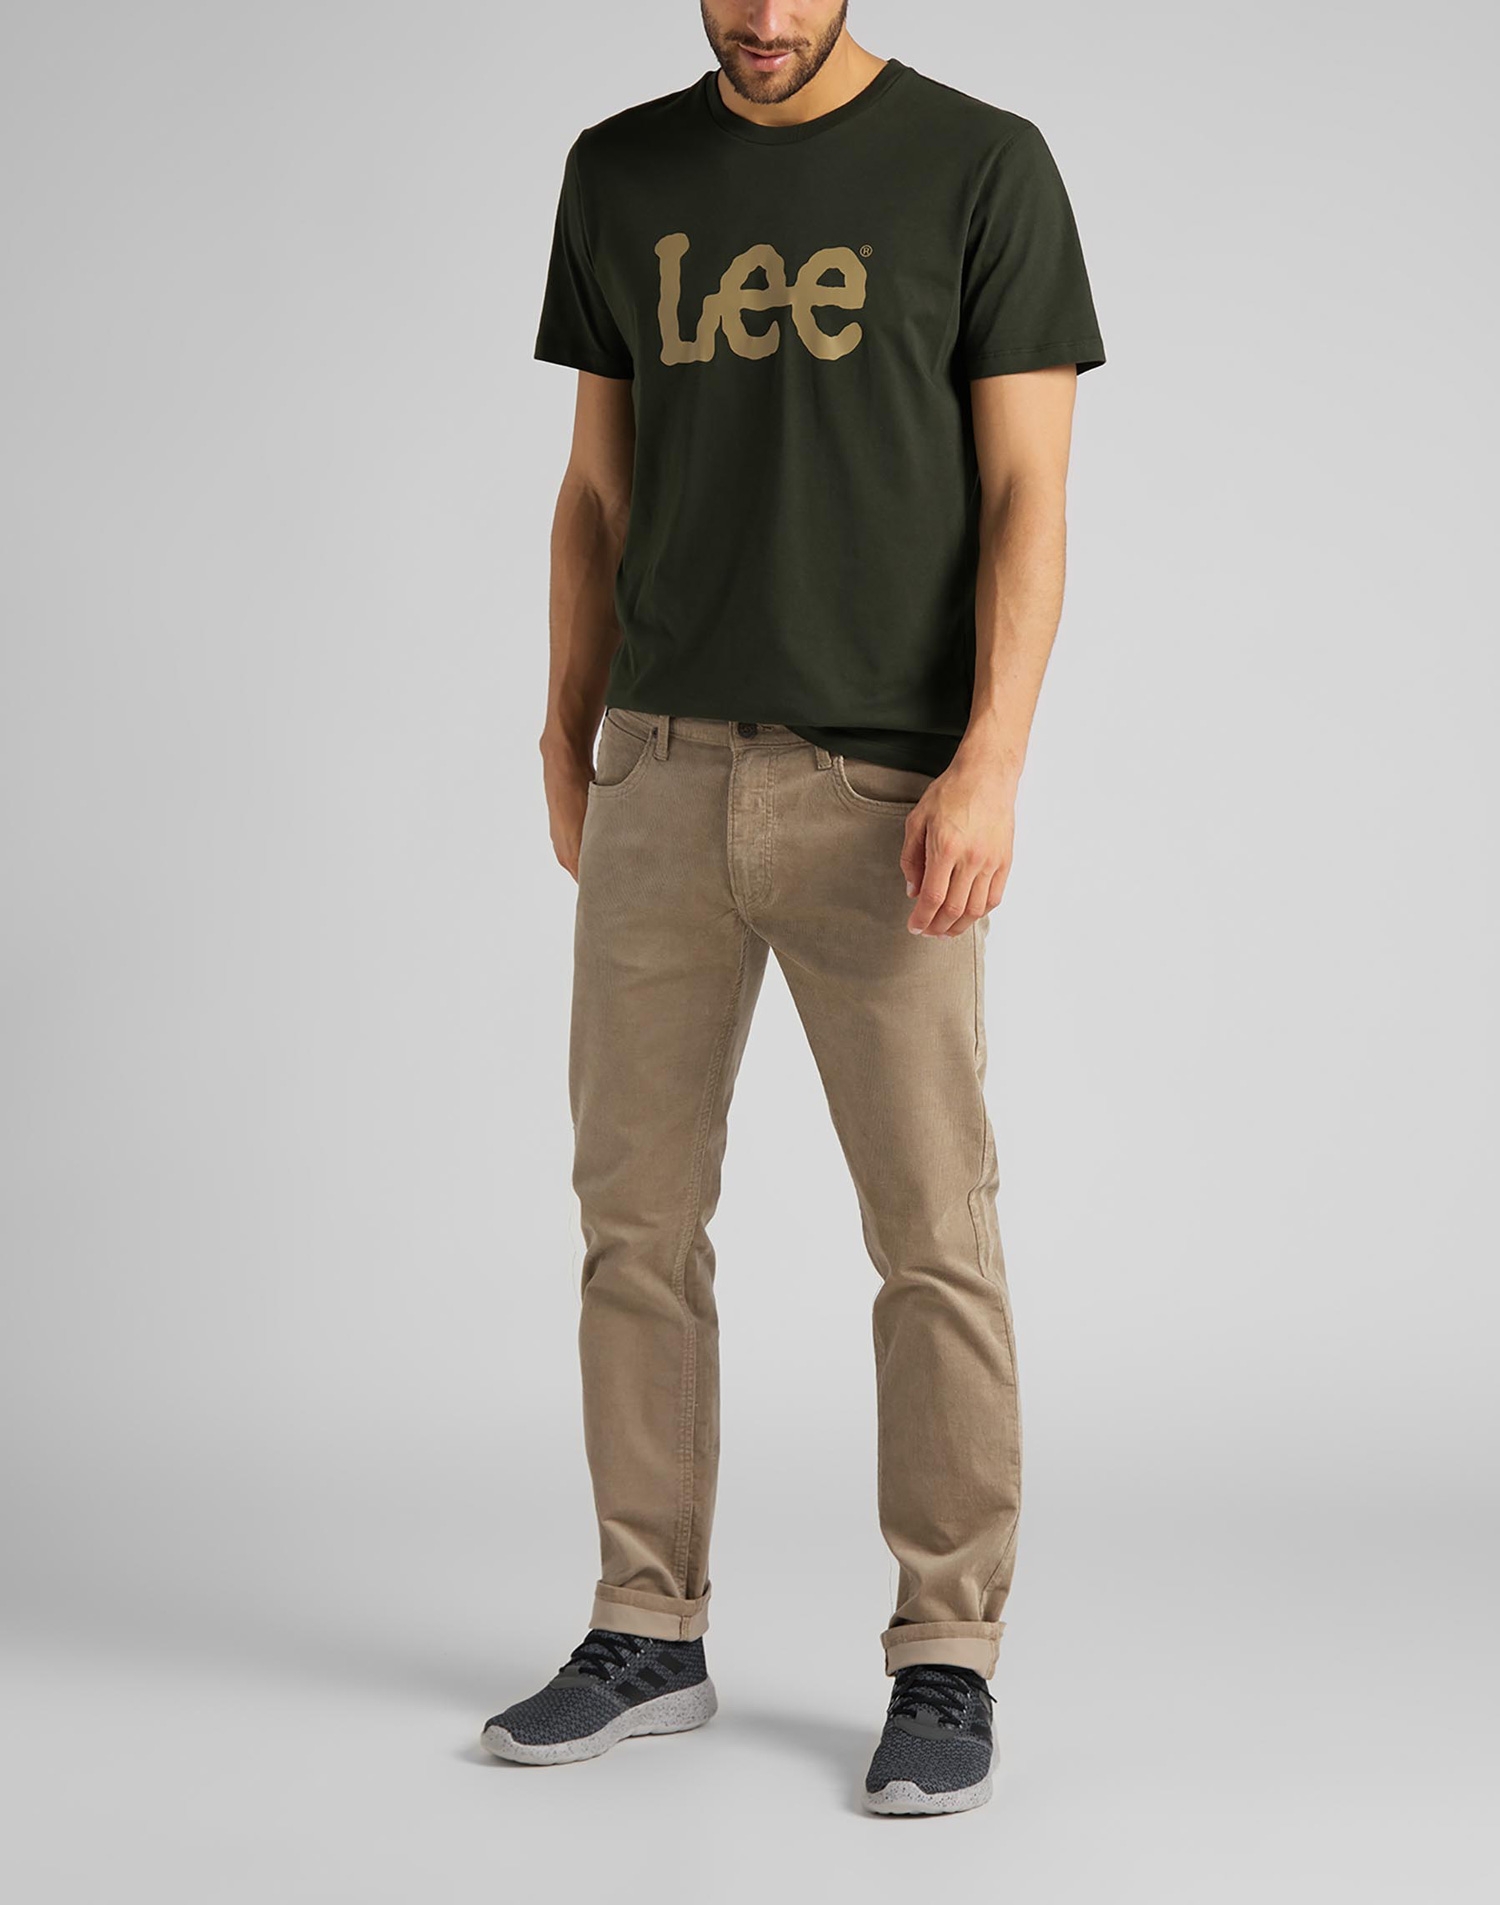 Lee Daren zip regular pantalons texans d'home de pana L707RL97 beix